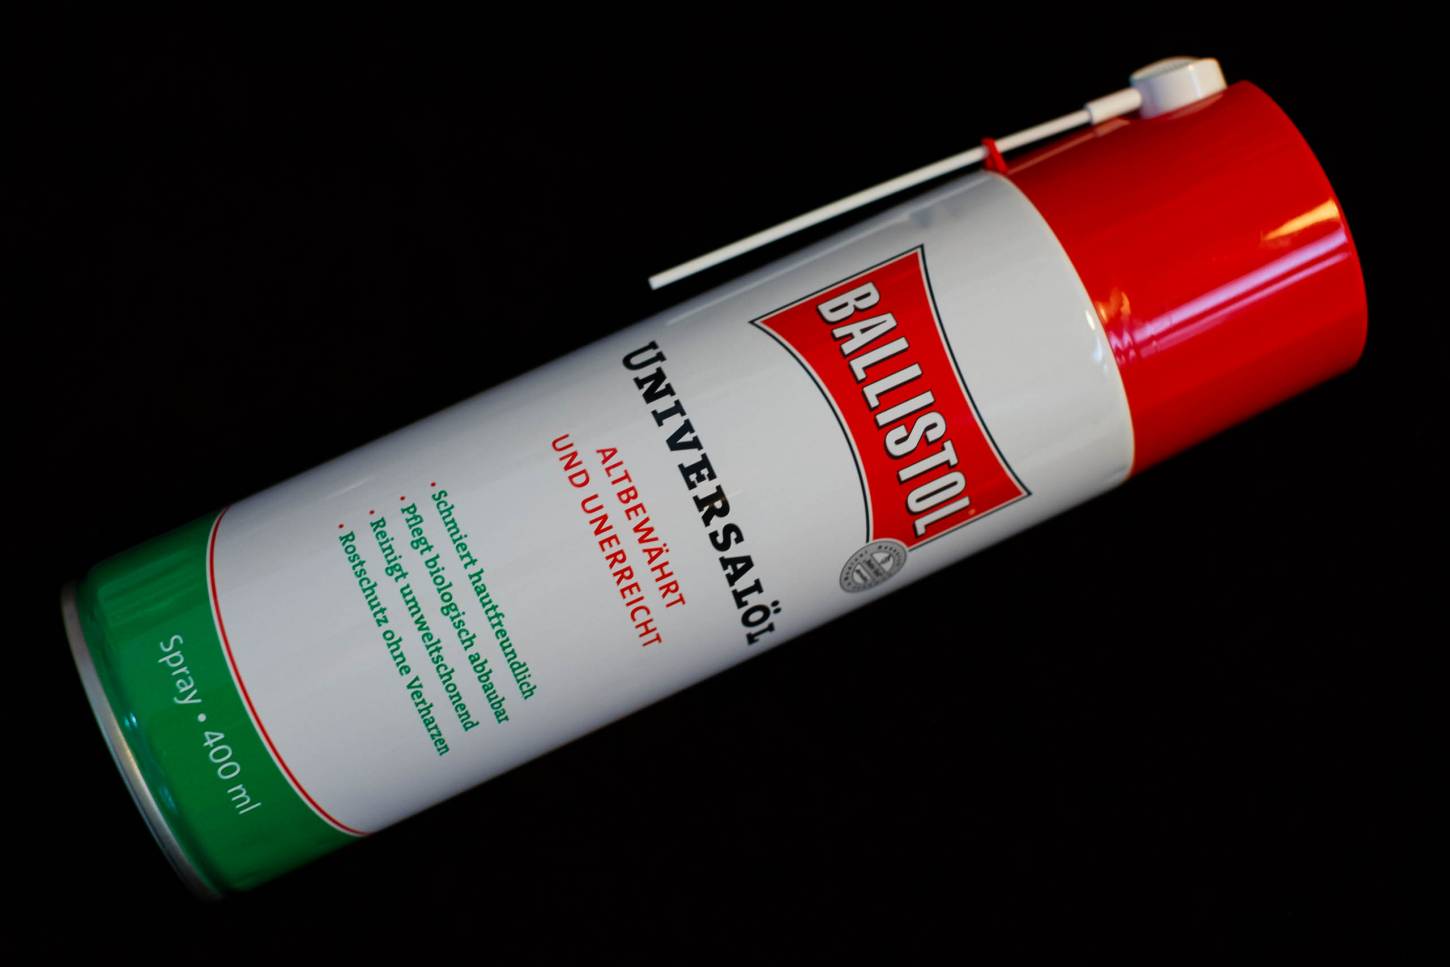 Ballistol GunCer Keramik-Waffenöl (Spray) günstig kaufen - Askari